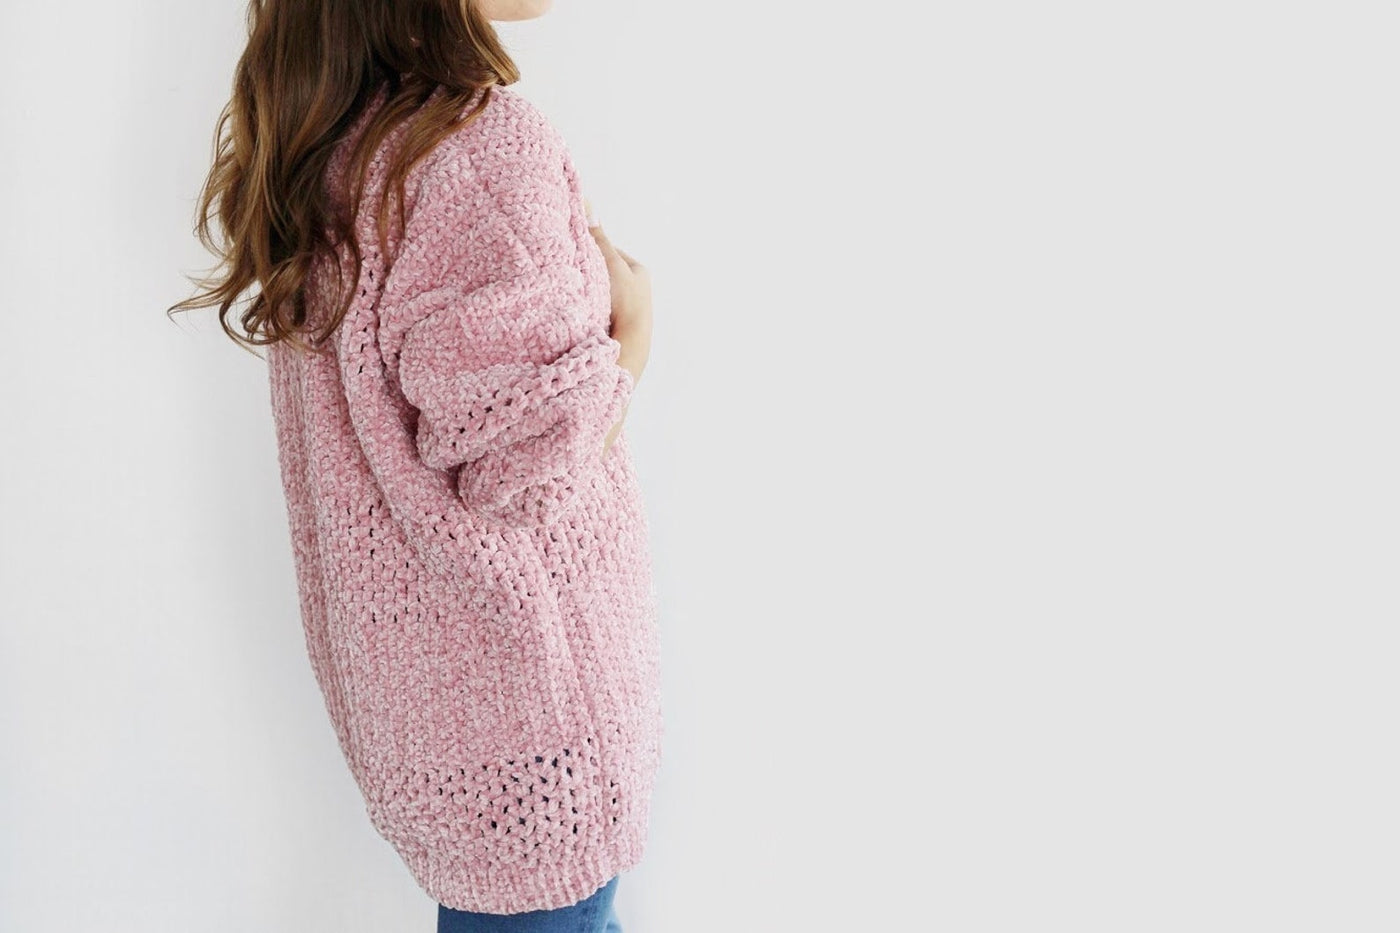 Velvet Dreams Cardigan Crochet Pattern - (Sizes XS to 5XL)